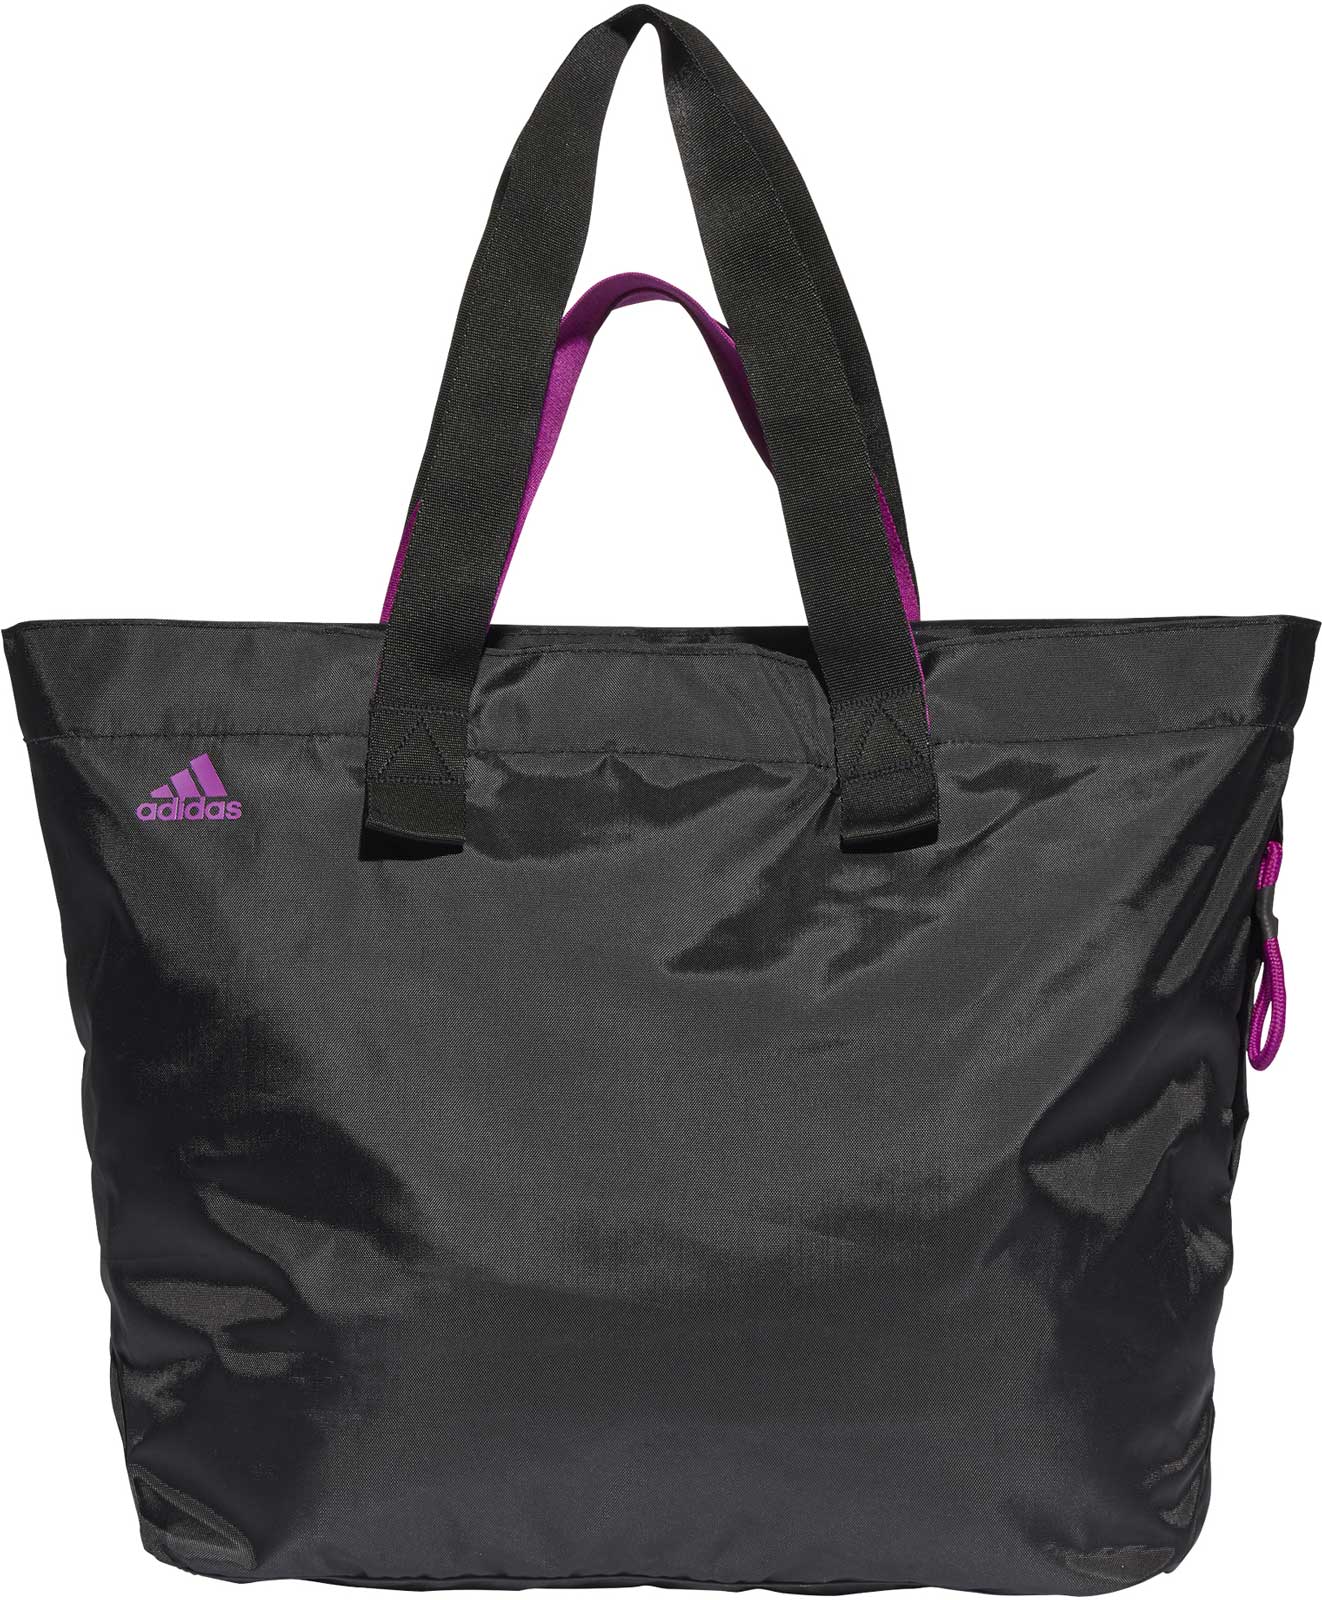 Women's sports bag